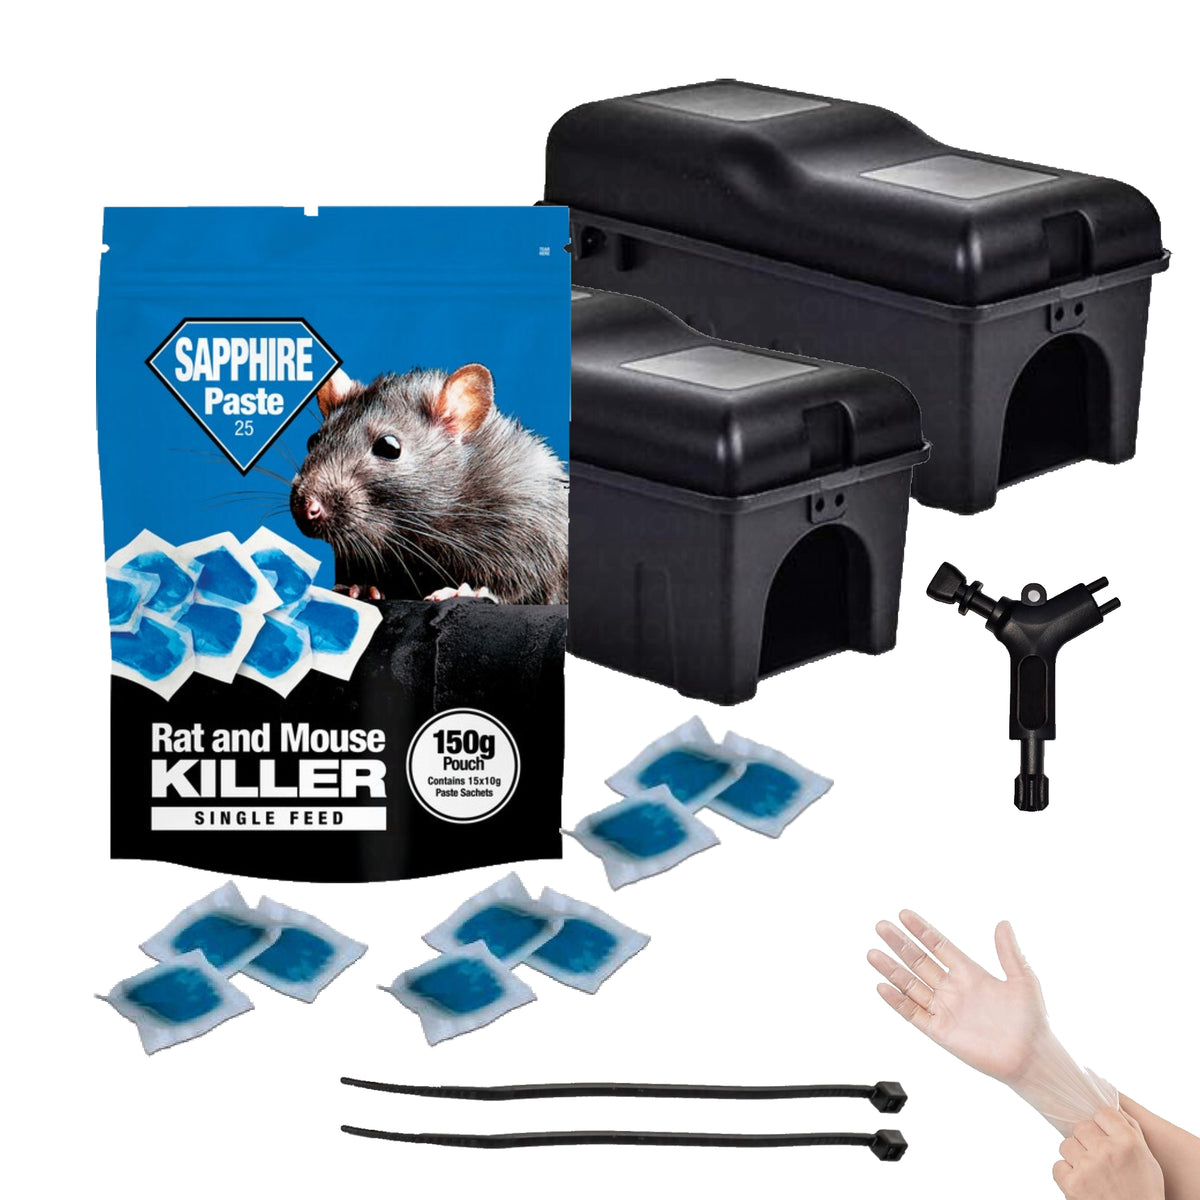 Professional Rodent Rat Trap Discreet Bait Station Box & Pasta Bait Poison BRODIFACOUM AT 0.0025% - THE MAXIMUM LEGAL STRENGTH (2 Solo Boxes + 150g Blue Pasta) - Moth Control